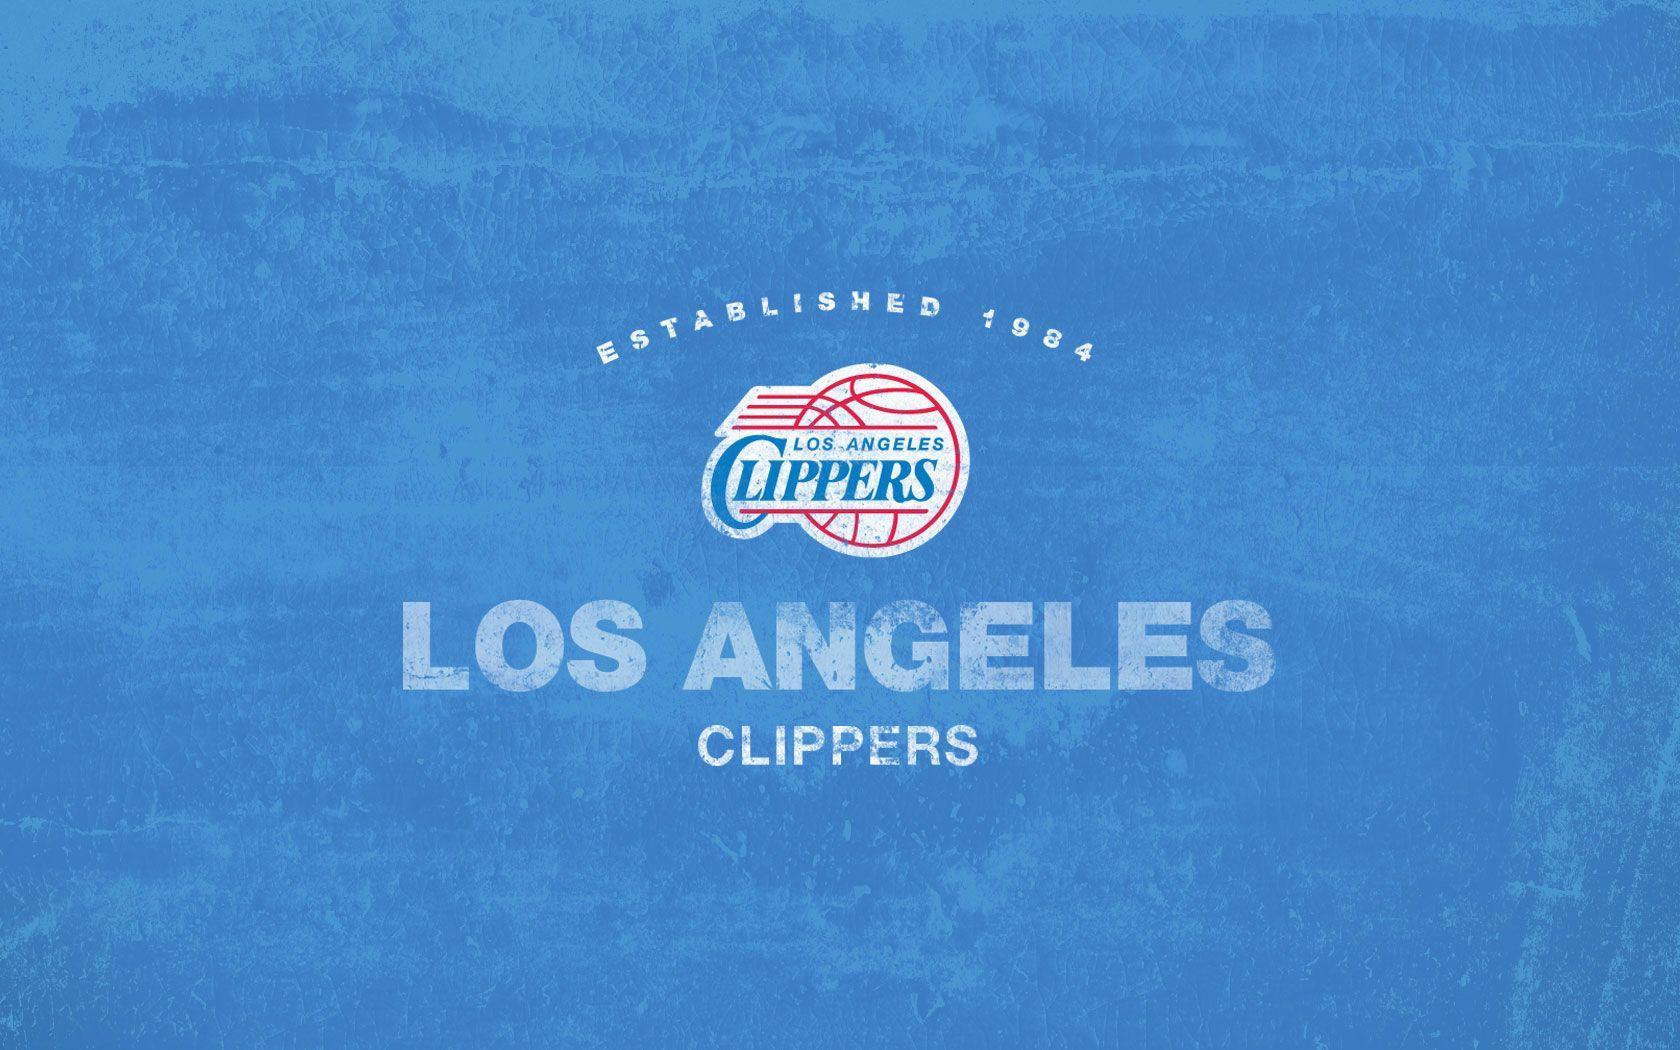 Los Angeles Clippers Wallpaper. Basketball Wallpaper at